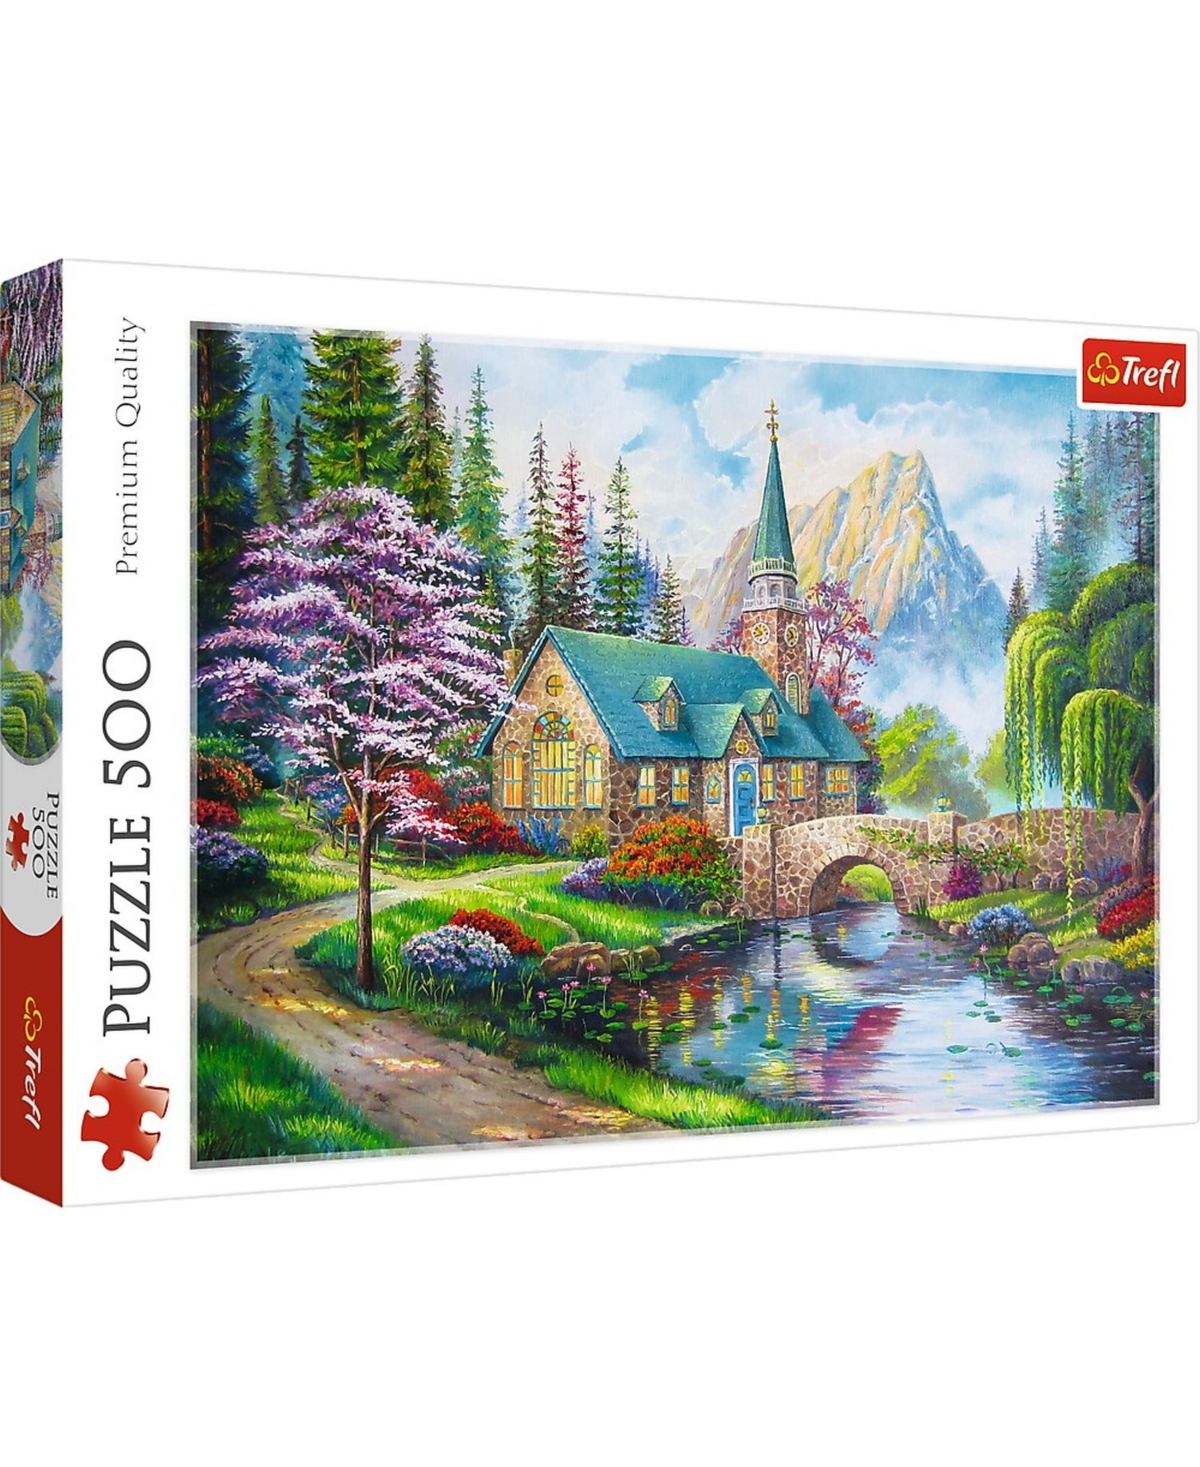 Trefl Jigsaw Puzzle Woodland Seclusion, 500 Piece In Multi